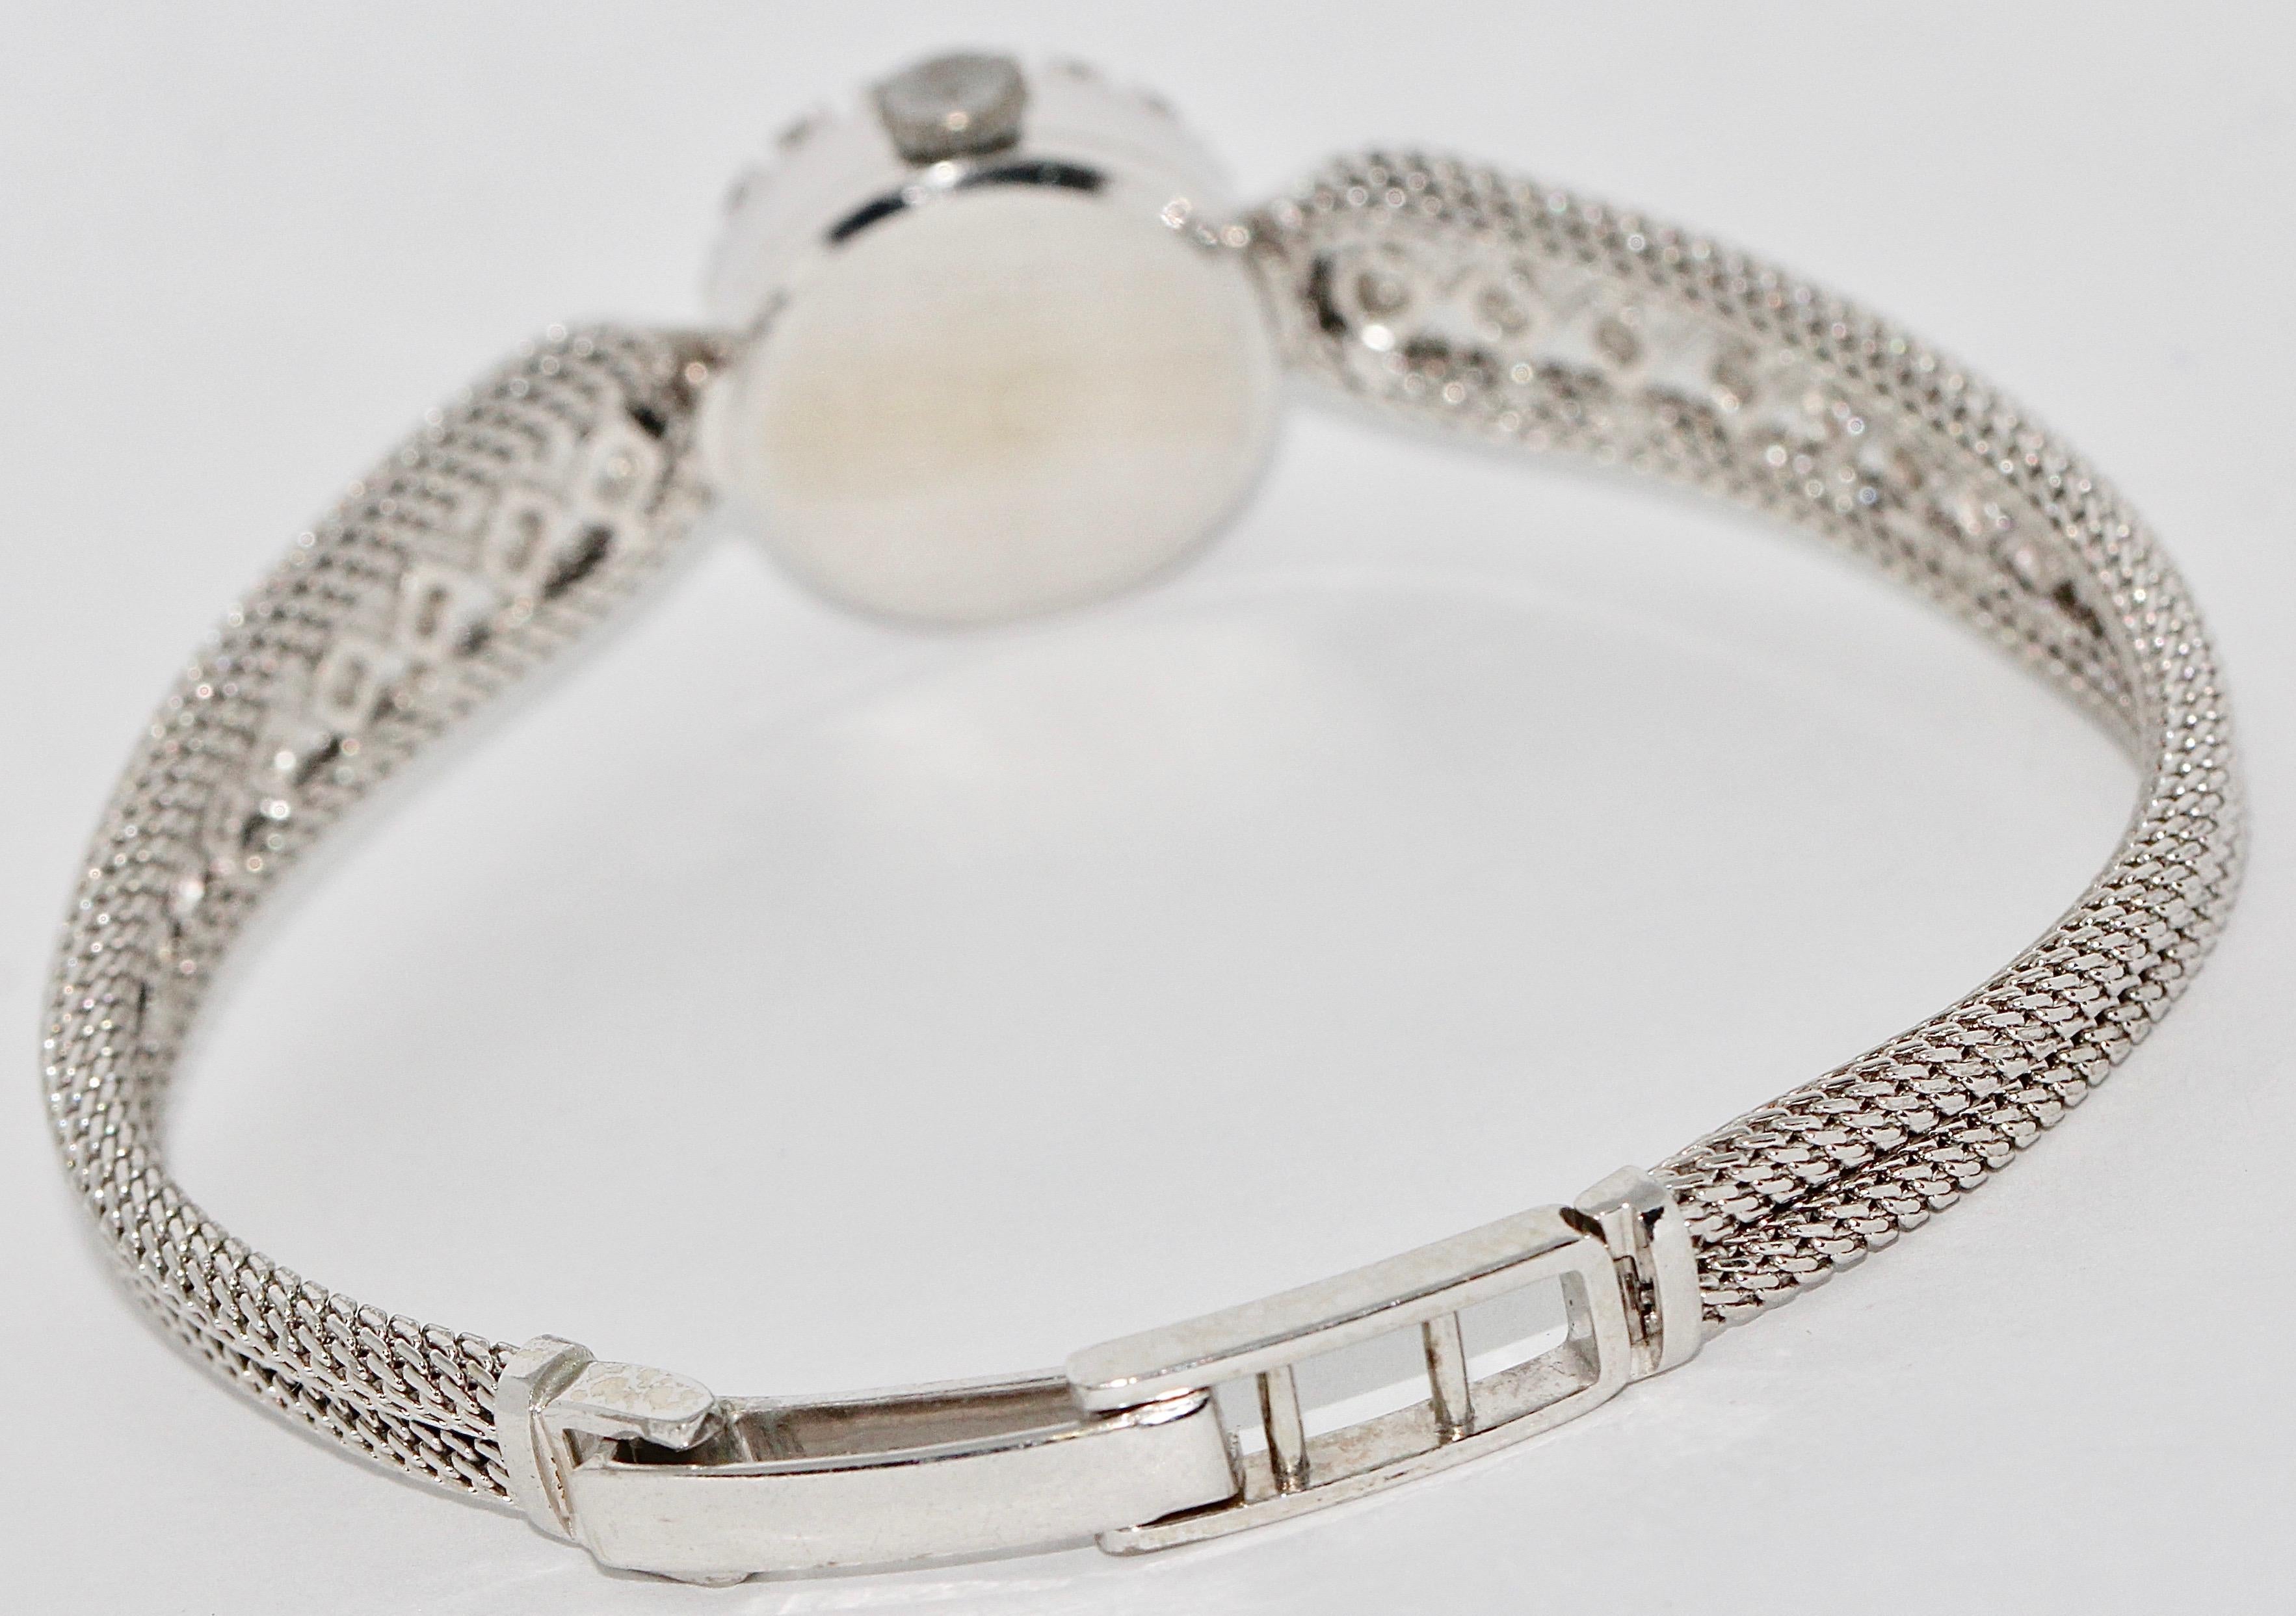 Ladies Wristwatch by Piaget, 18 Karat White Gold with Diamonds 4